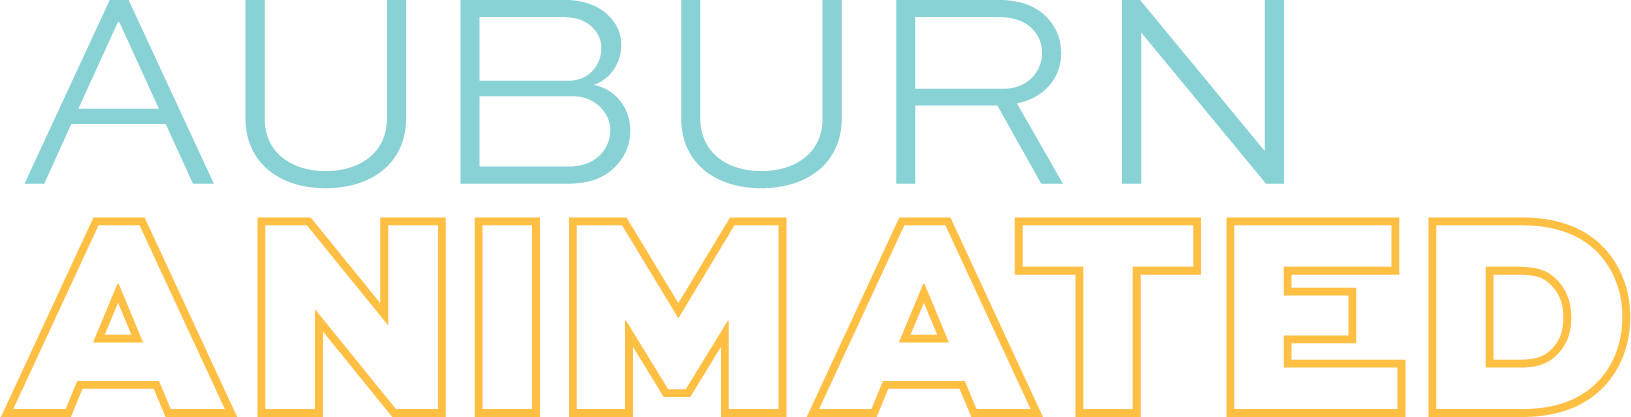 Auburn Animated title typography